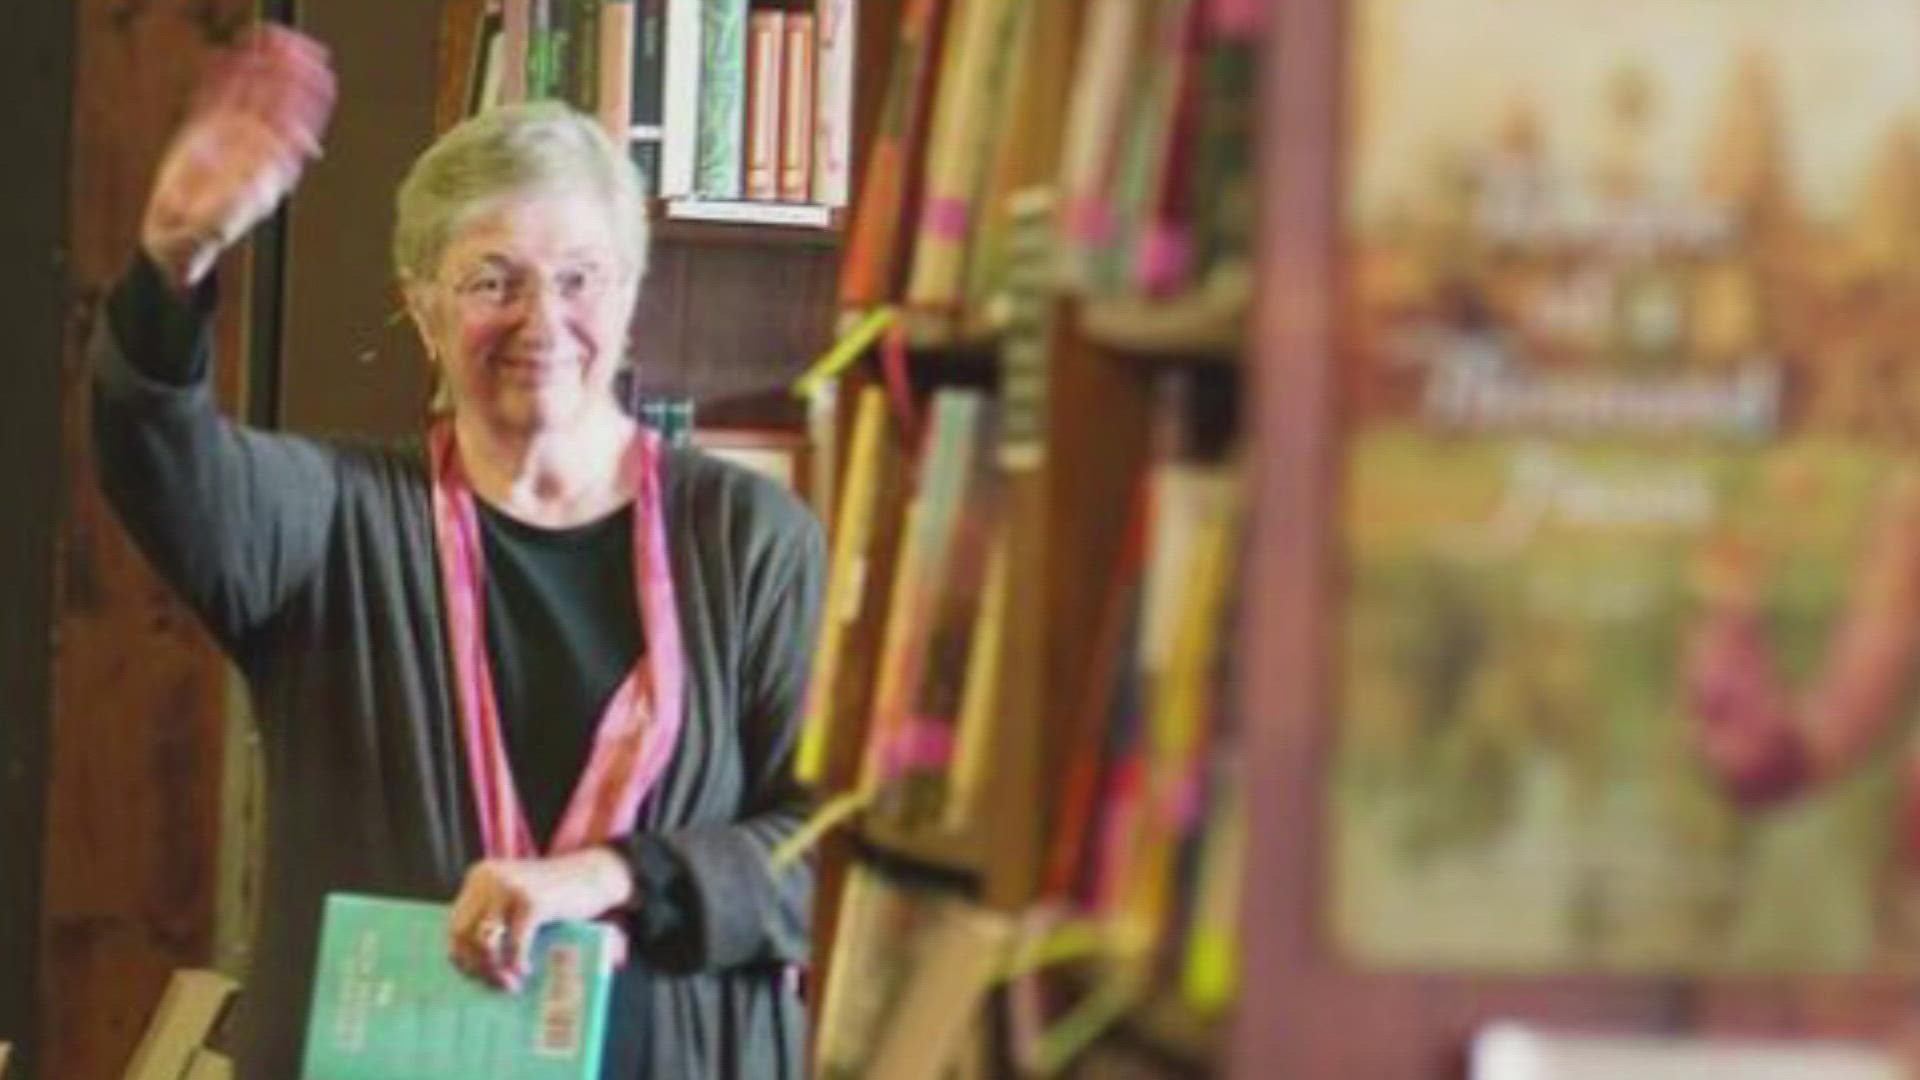 Joyce Meskis ran the beloved bookstore from 1974-2015.